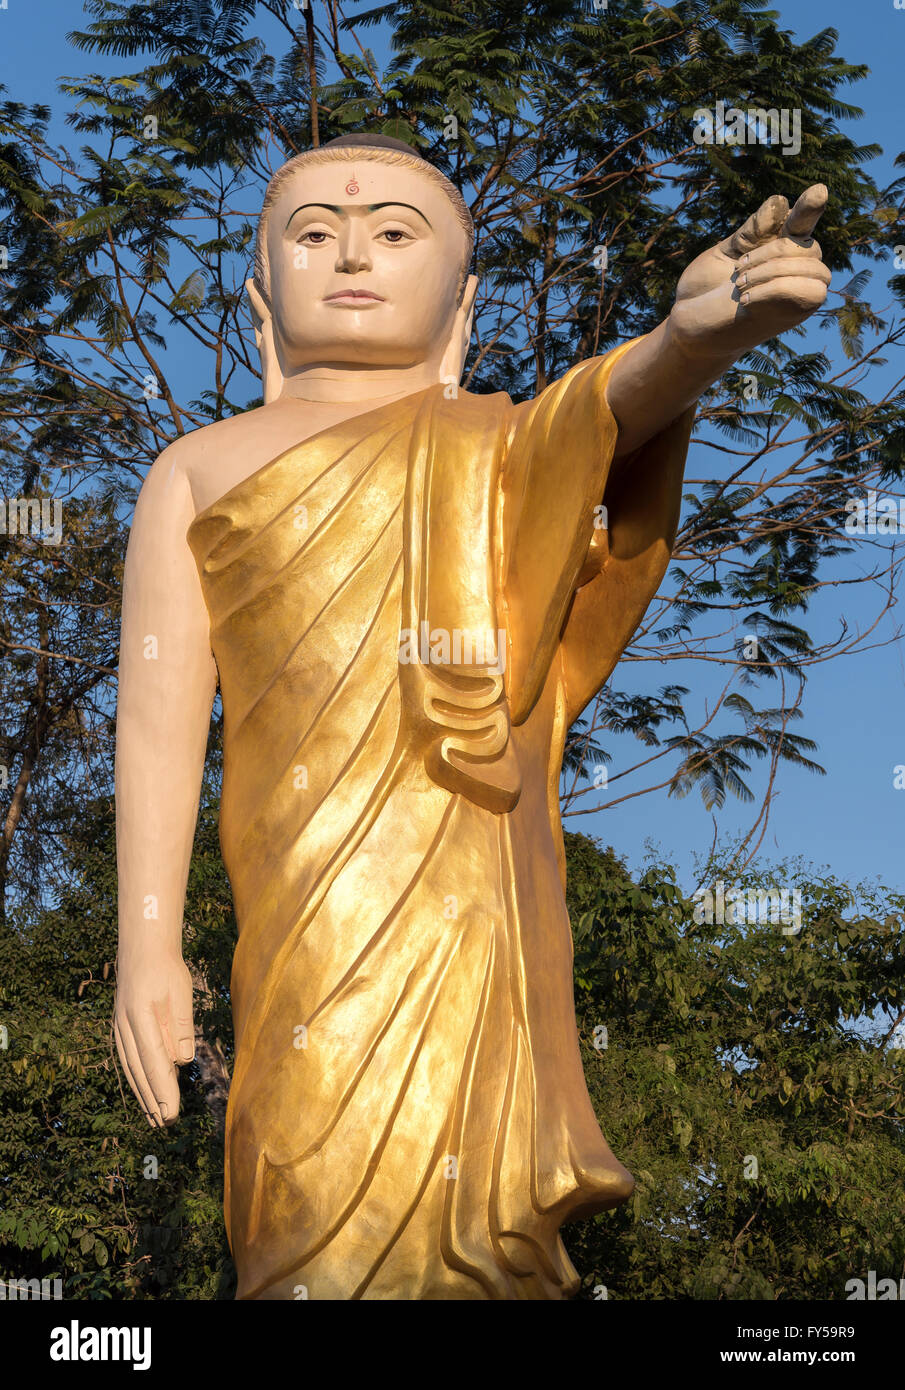 Buddha statue with extended arm and pointing finger, Naung Daw Gyi Mya Tha Lyaung, Bago, Burma, Myanmar Stock Photo